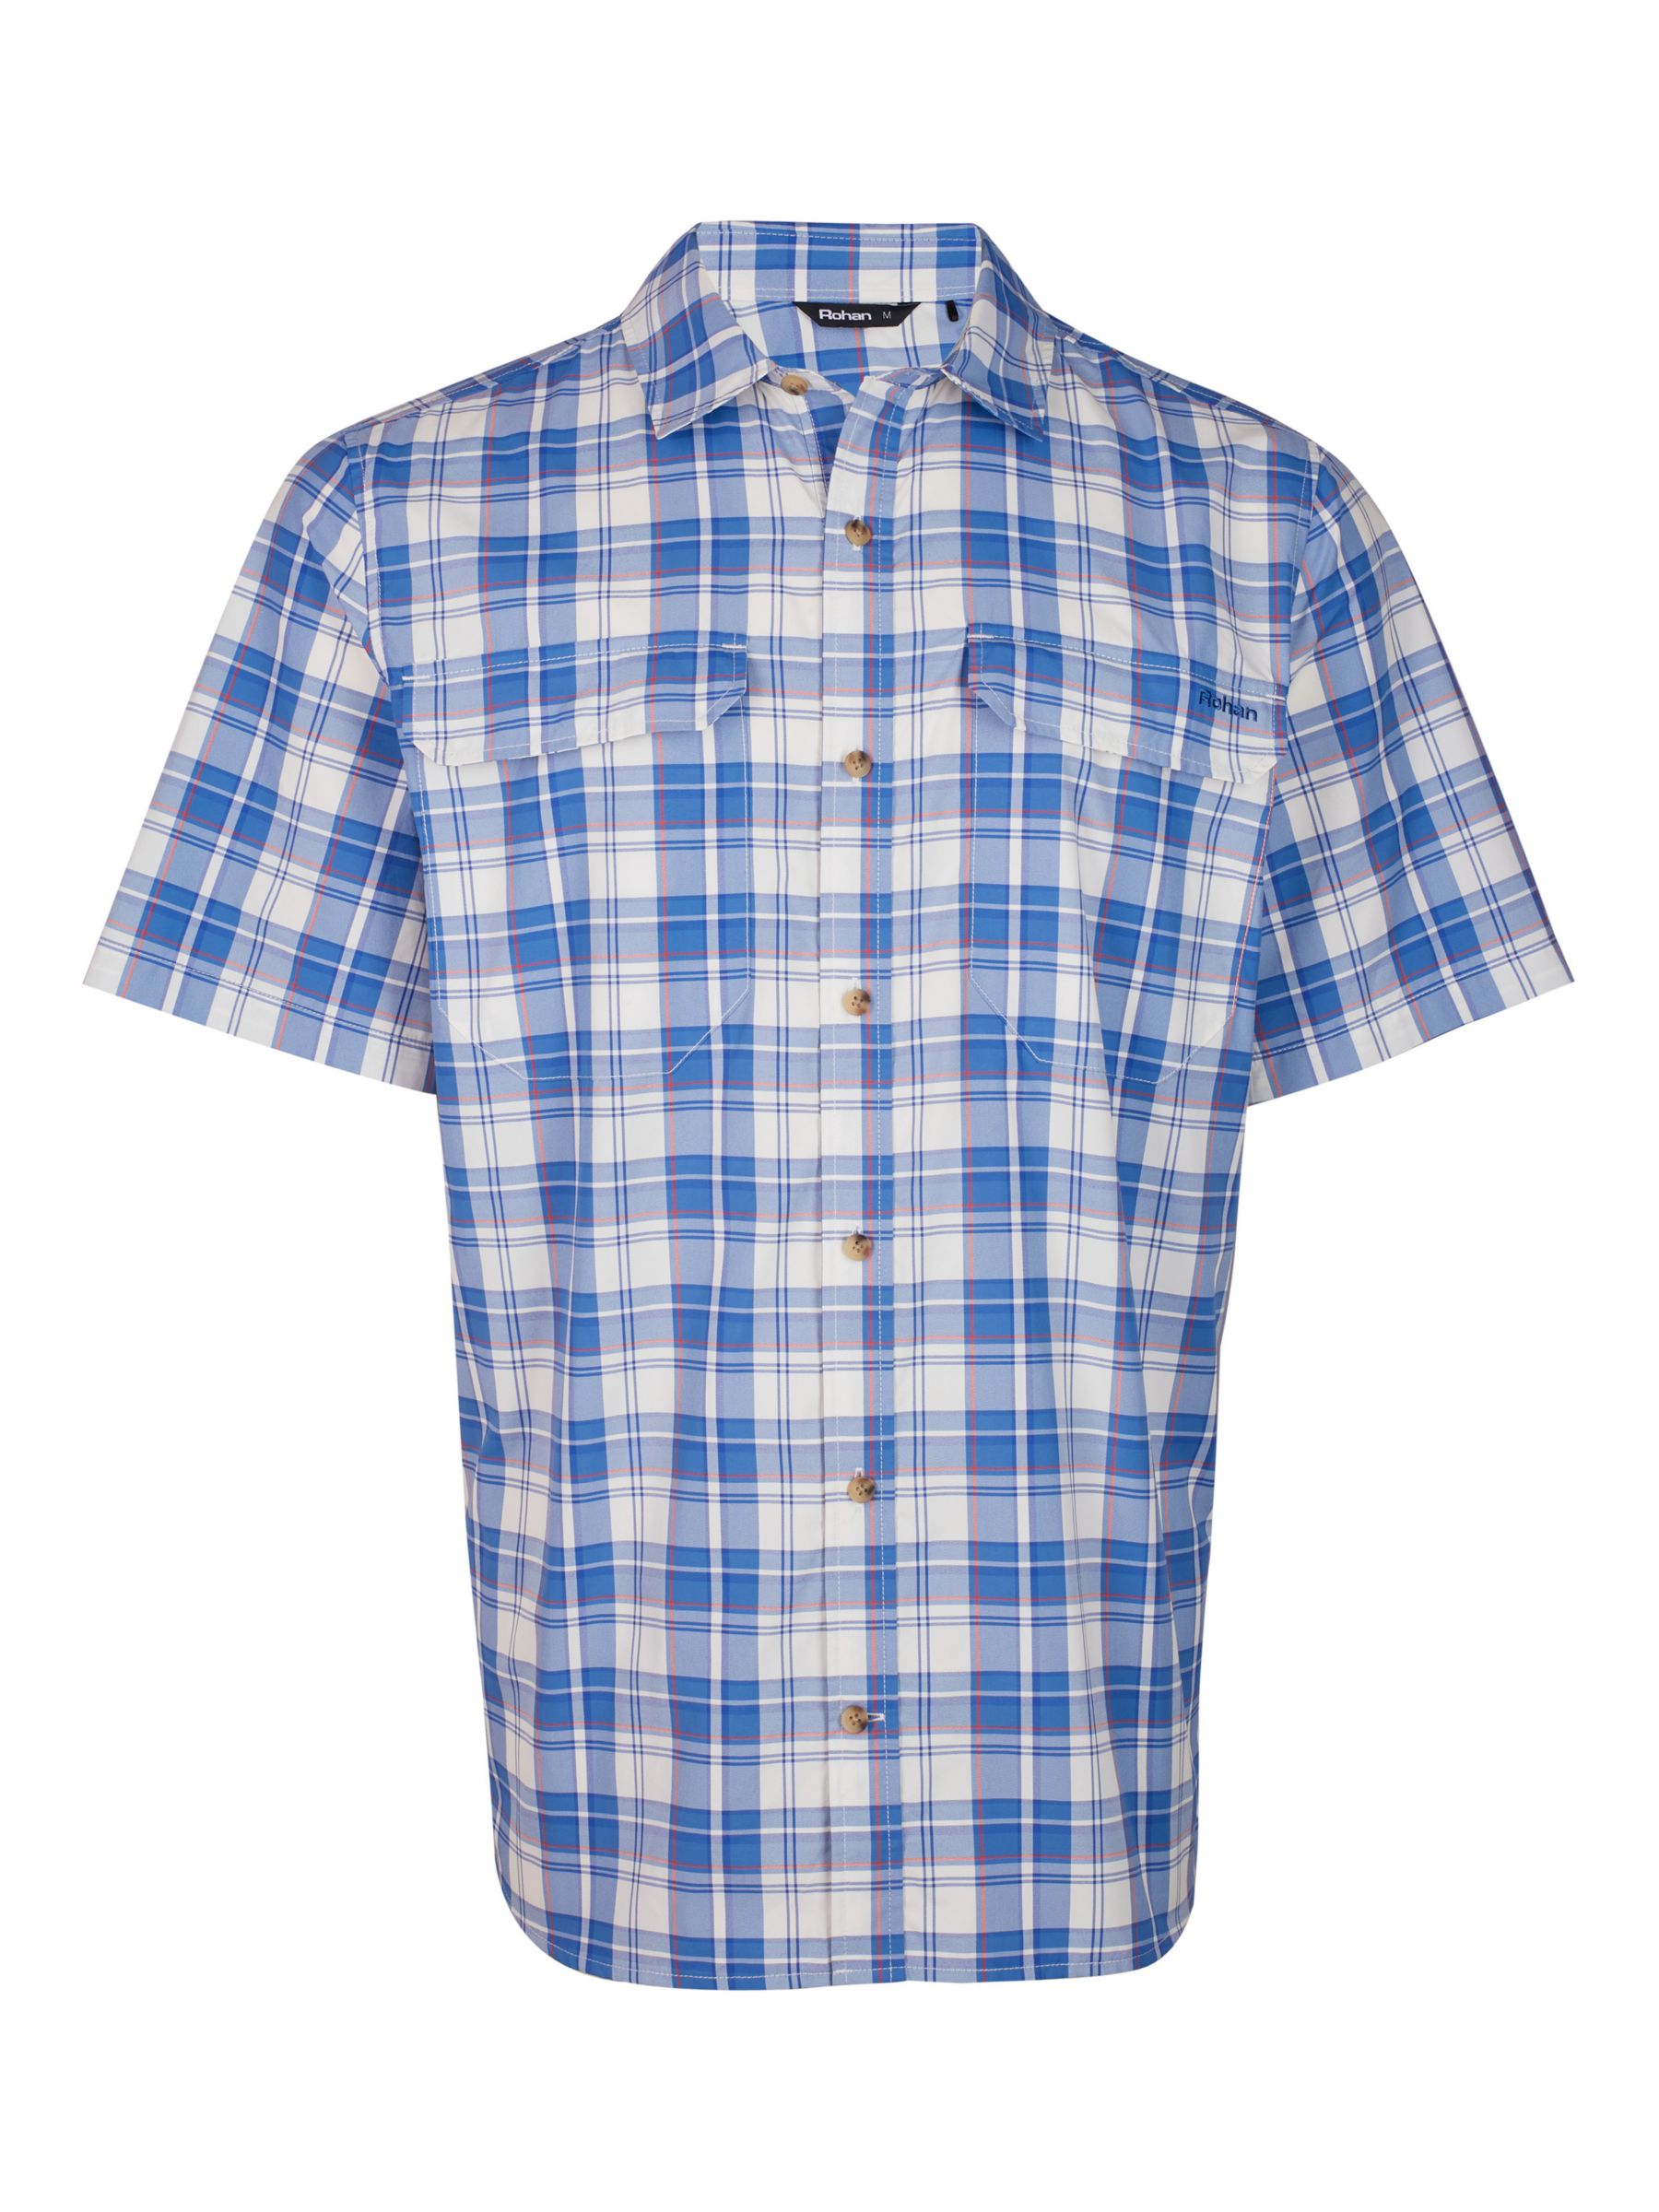 Buy Rohan Pennine Short Sleeve Shirt Online at johnlewis.com